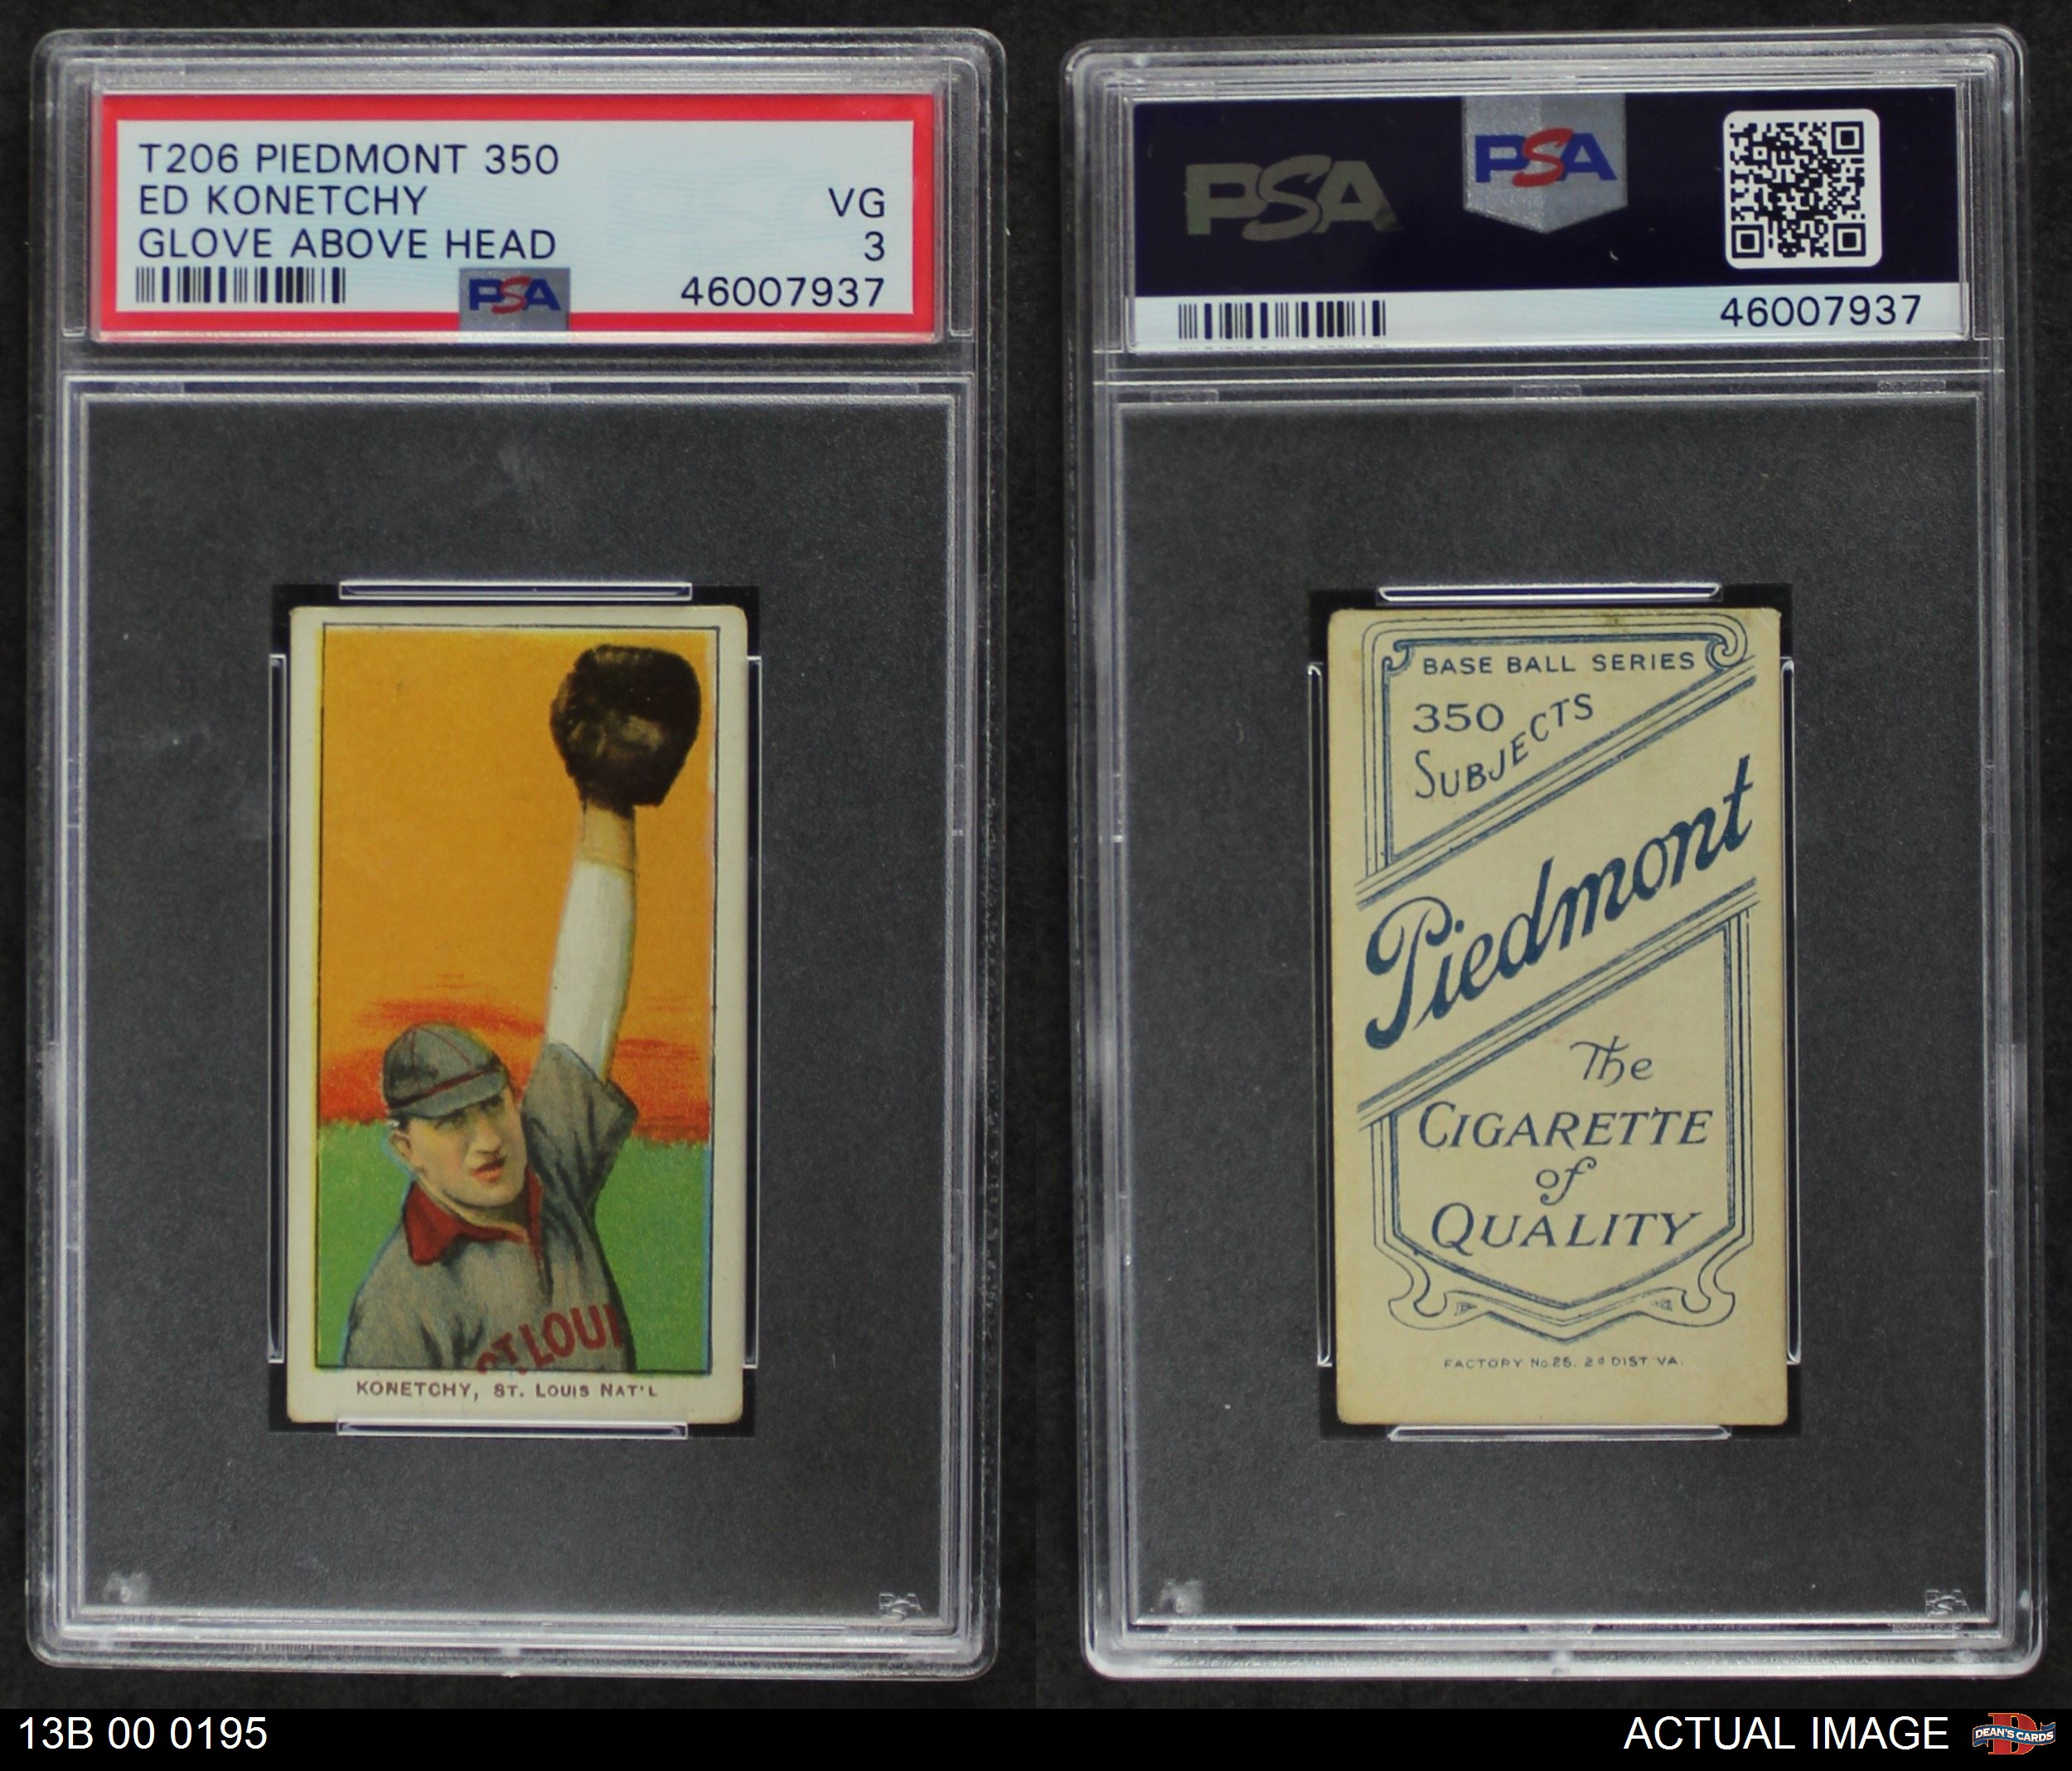 psa baseball Louis Cardinals Grade Fair/Poor card#255 psa ed konetchy of the St glove above head 1909 t206 tobacco 